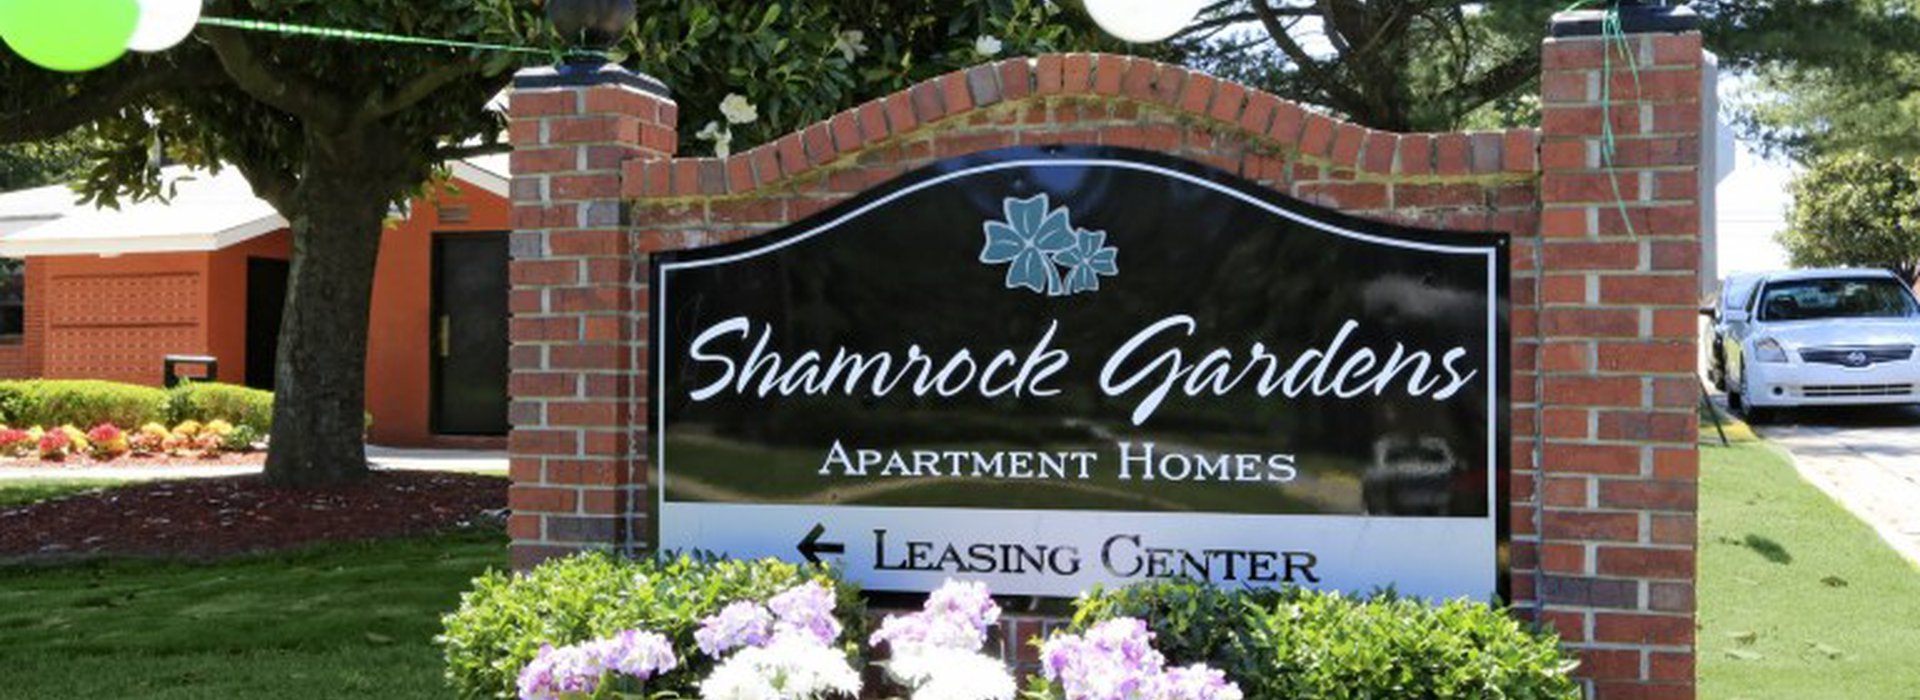 Shamrock Garden entrance sign